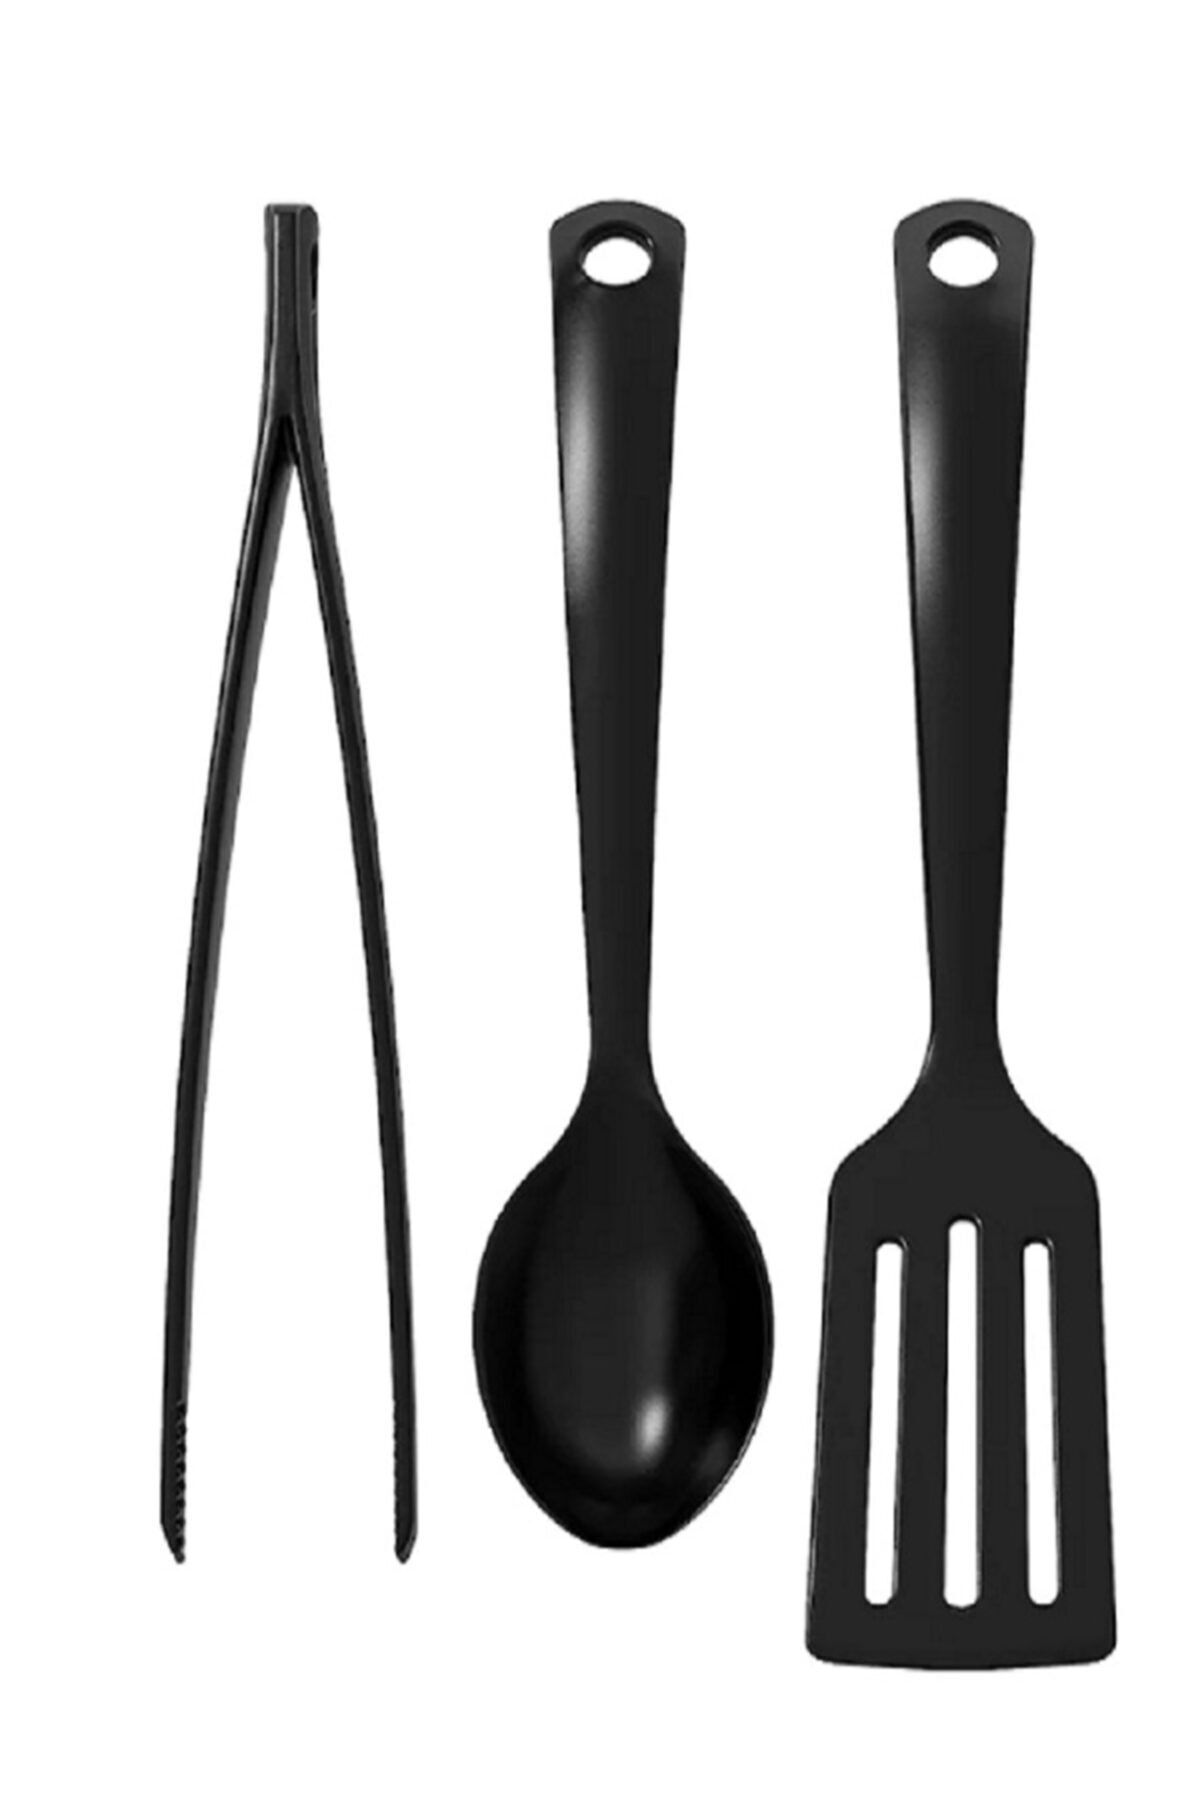 IKEA GNARP mutfak gereçleri seti, siyah, 3 parça